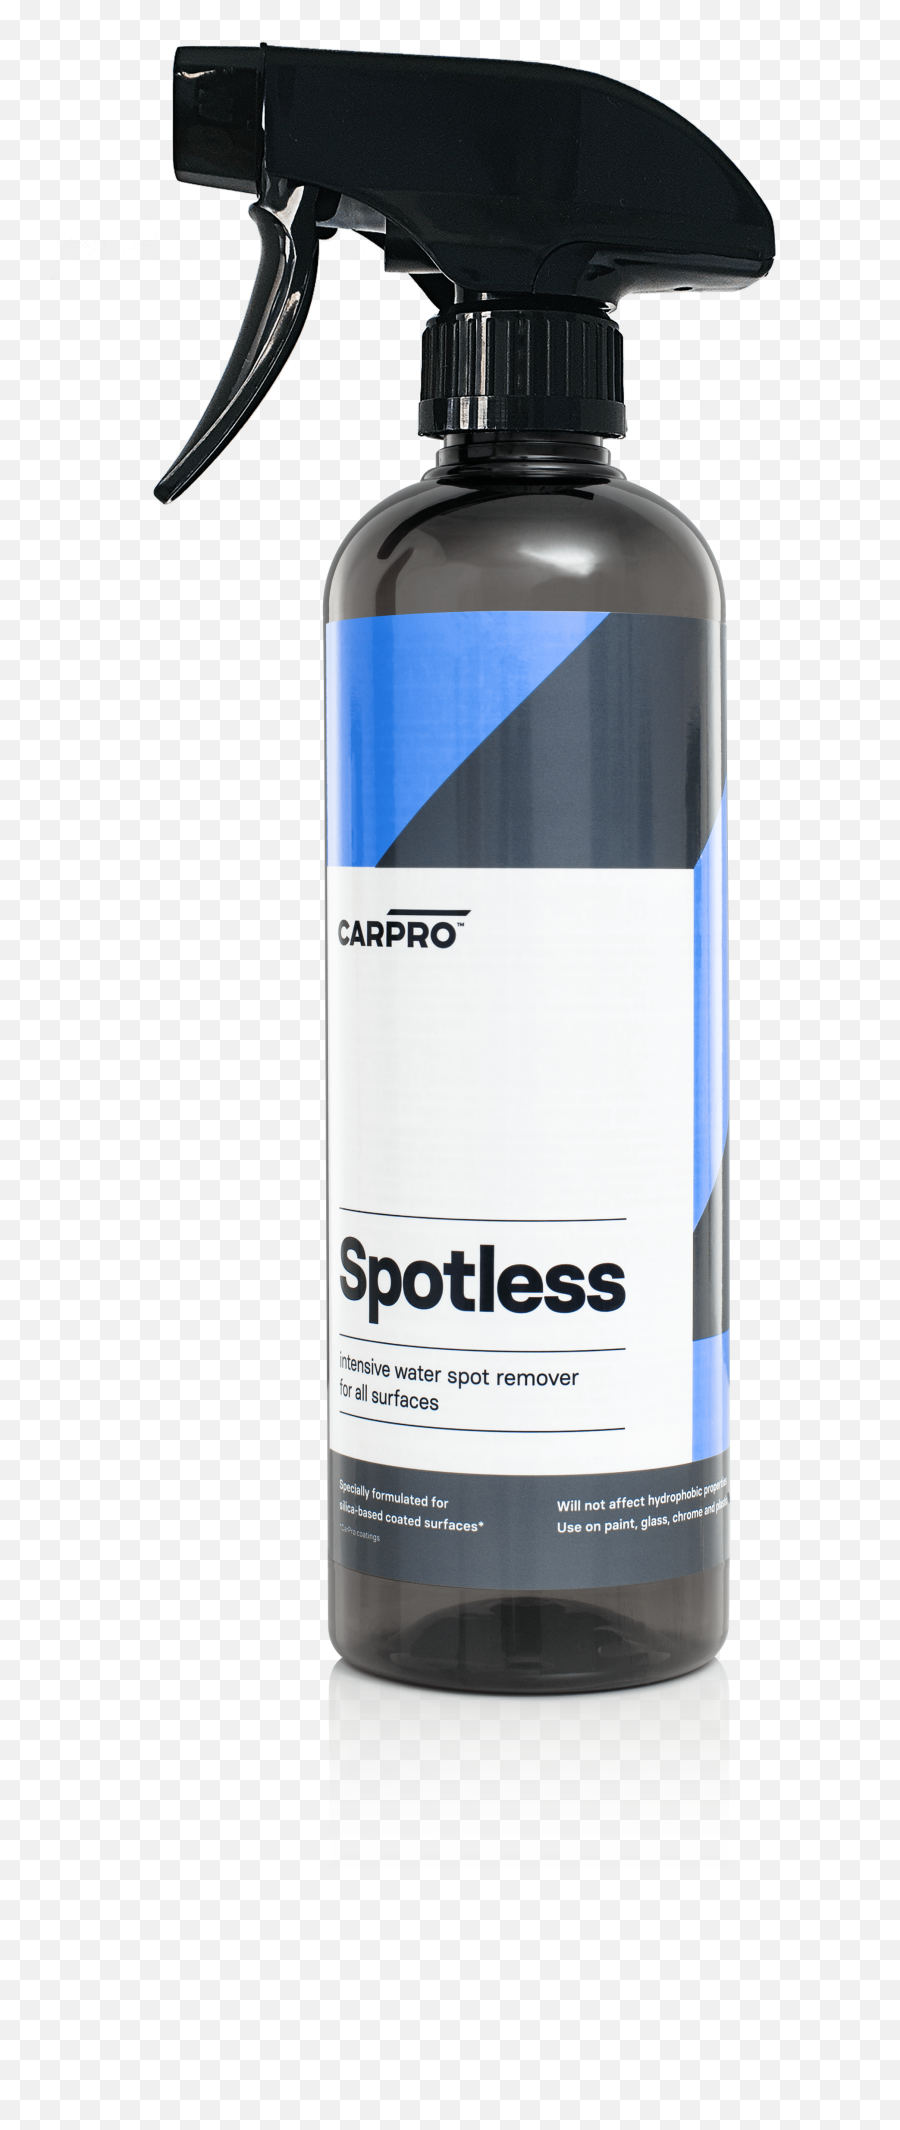 Carpro Spotless Water Spot Remover Emoji,Transparent Glass Paint